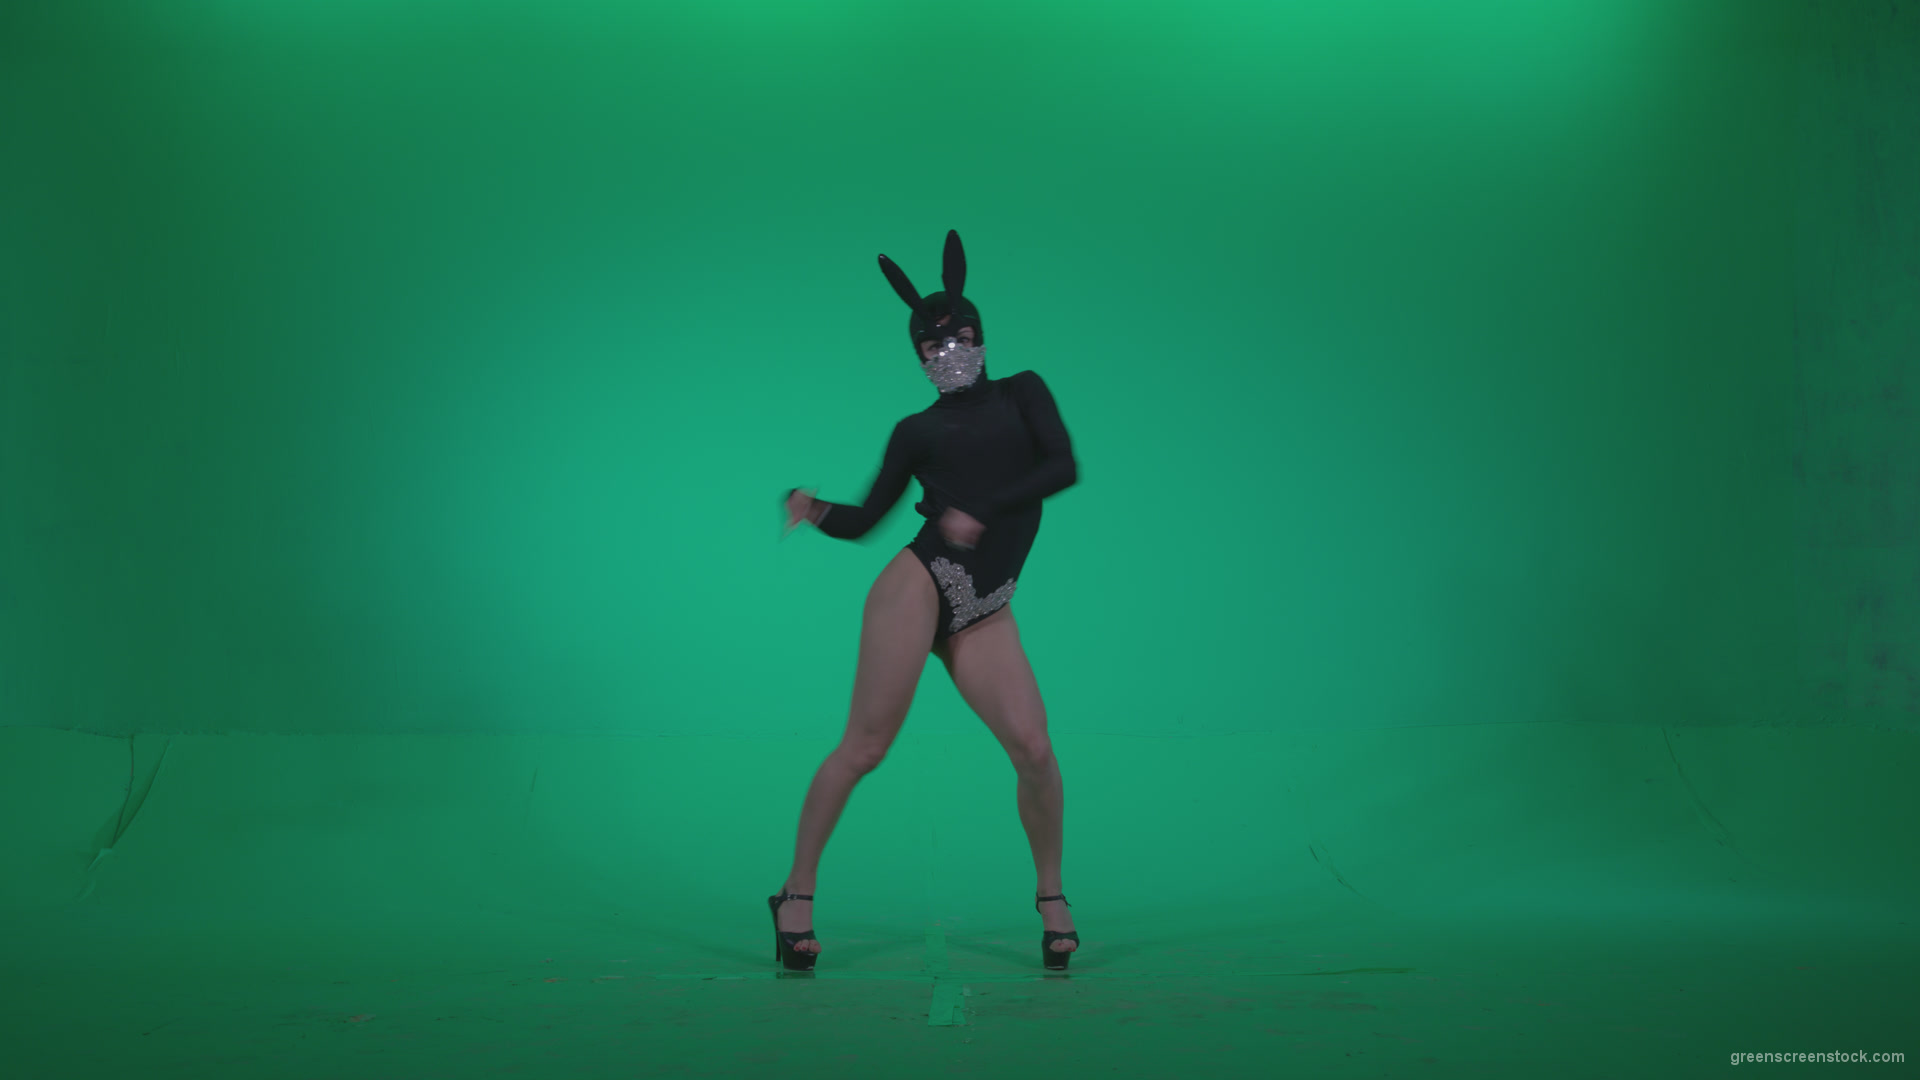 Go-go-Dancer-Black-Rabbit-u9-Green-Screen-Video-Footage_007 Green Screen Stock